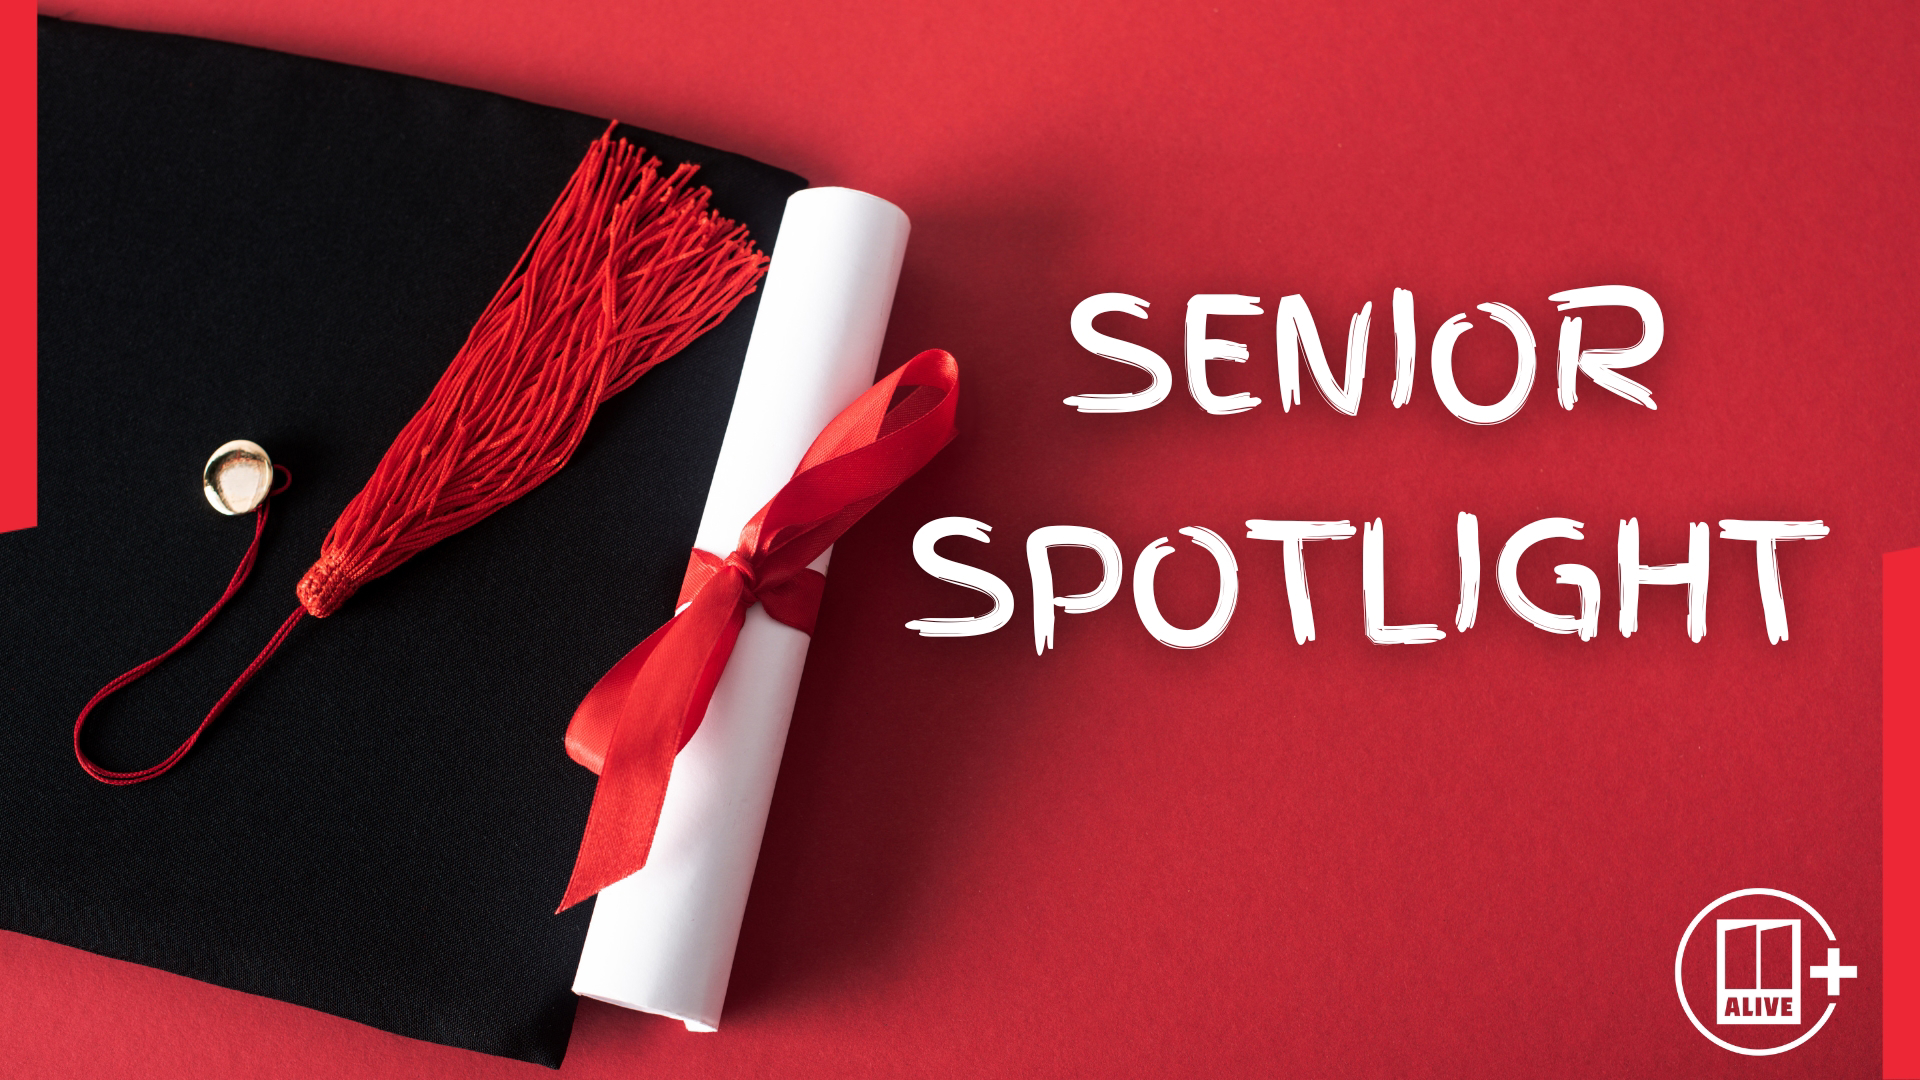 11Alive is shining a spotlight on stellar graduating seniors.